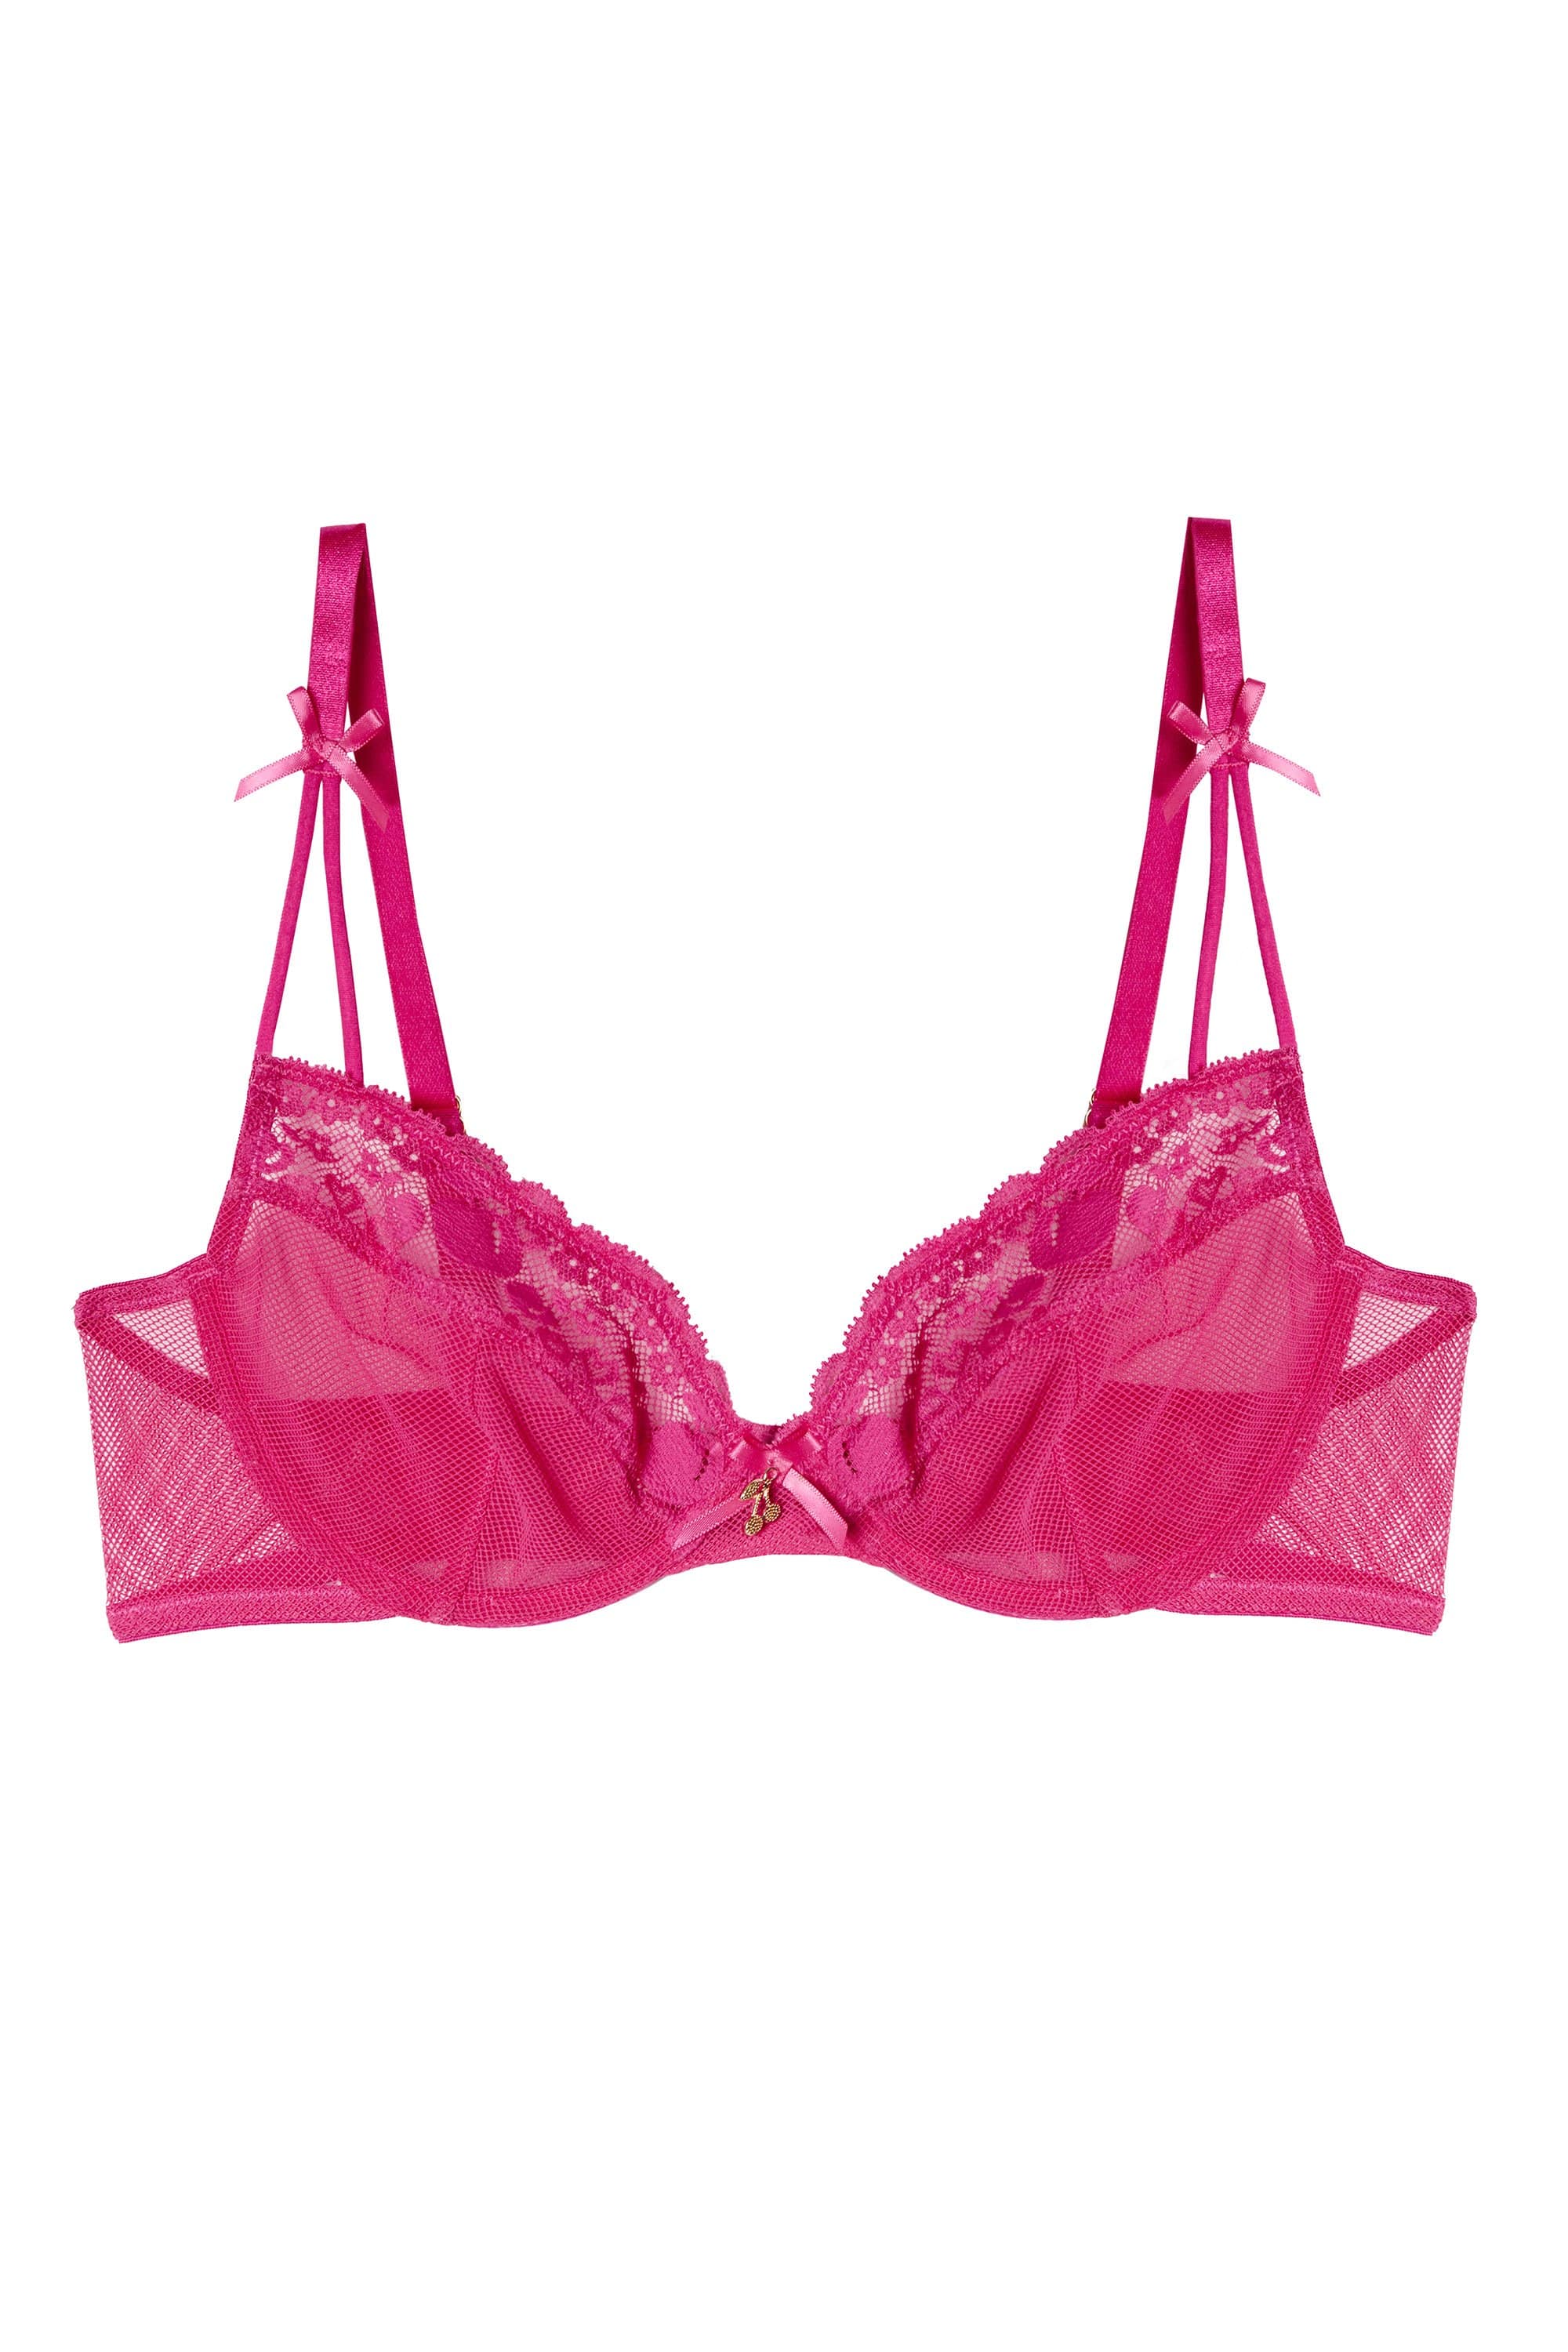 PINK Victoria's Secret, Intimates & Sleepwear, Pink Victorias Secret  Ultimate Unlined Cherry Blossom Sports Bra Small